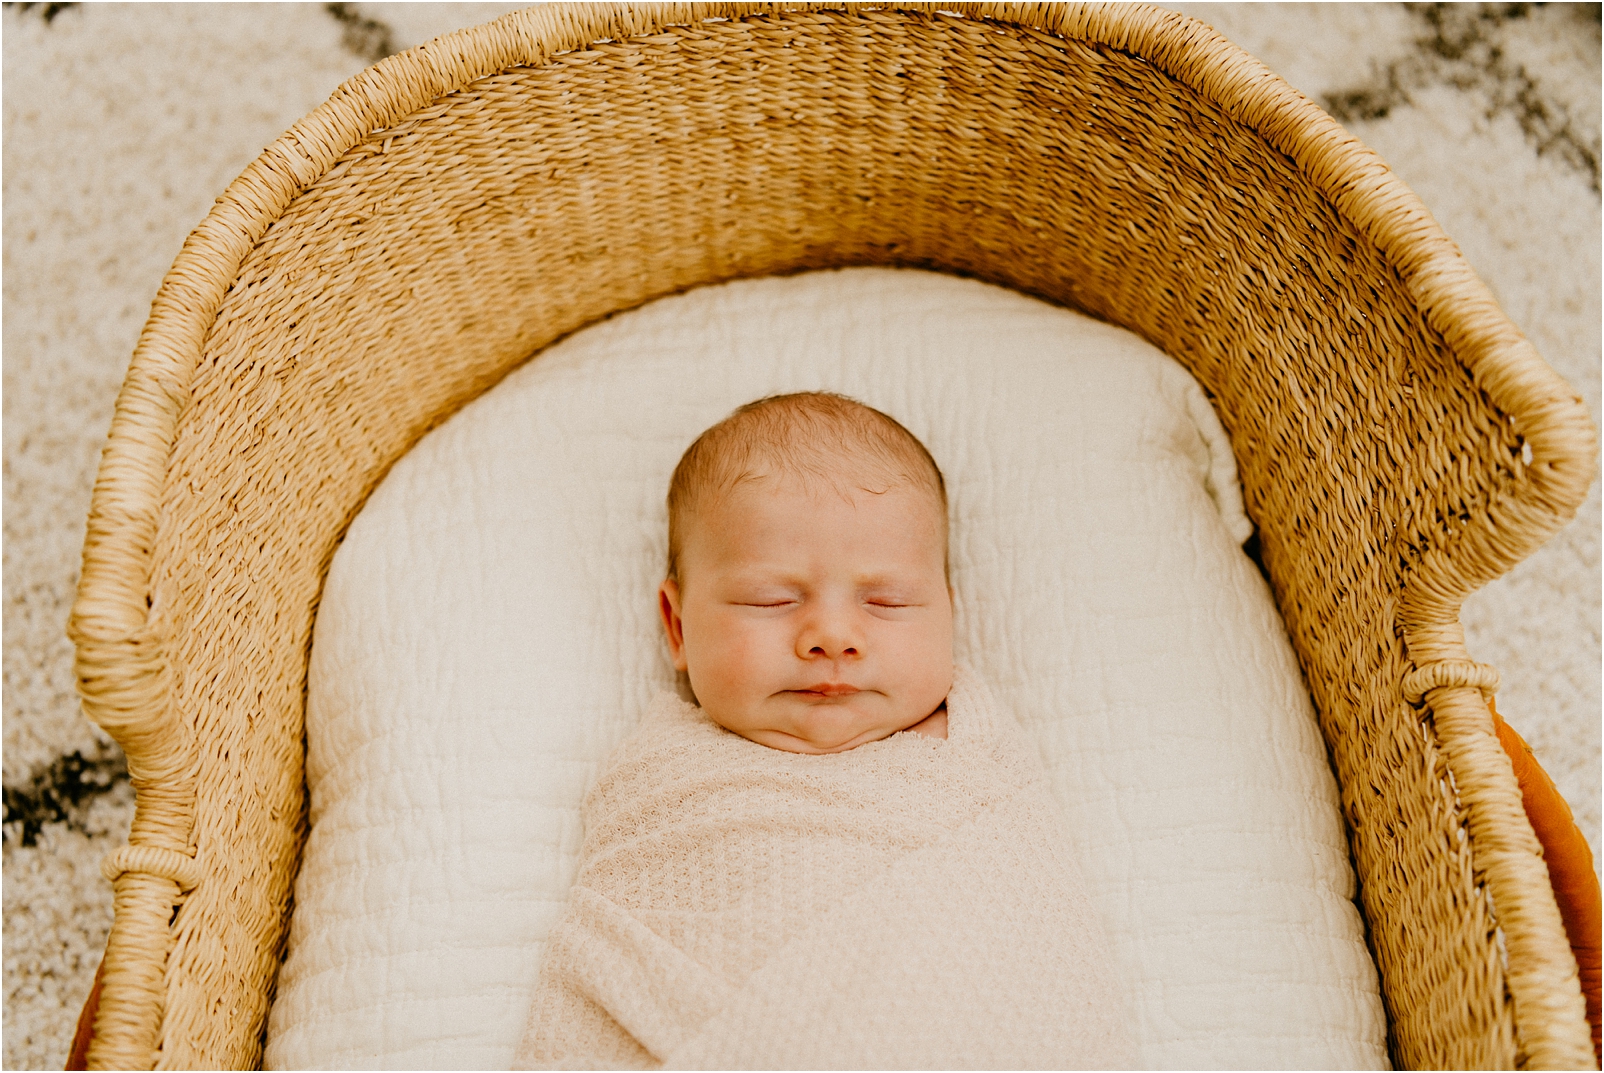  baby in a bassinet sleeping